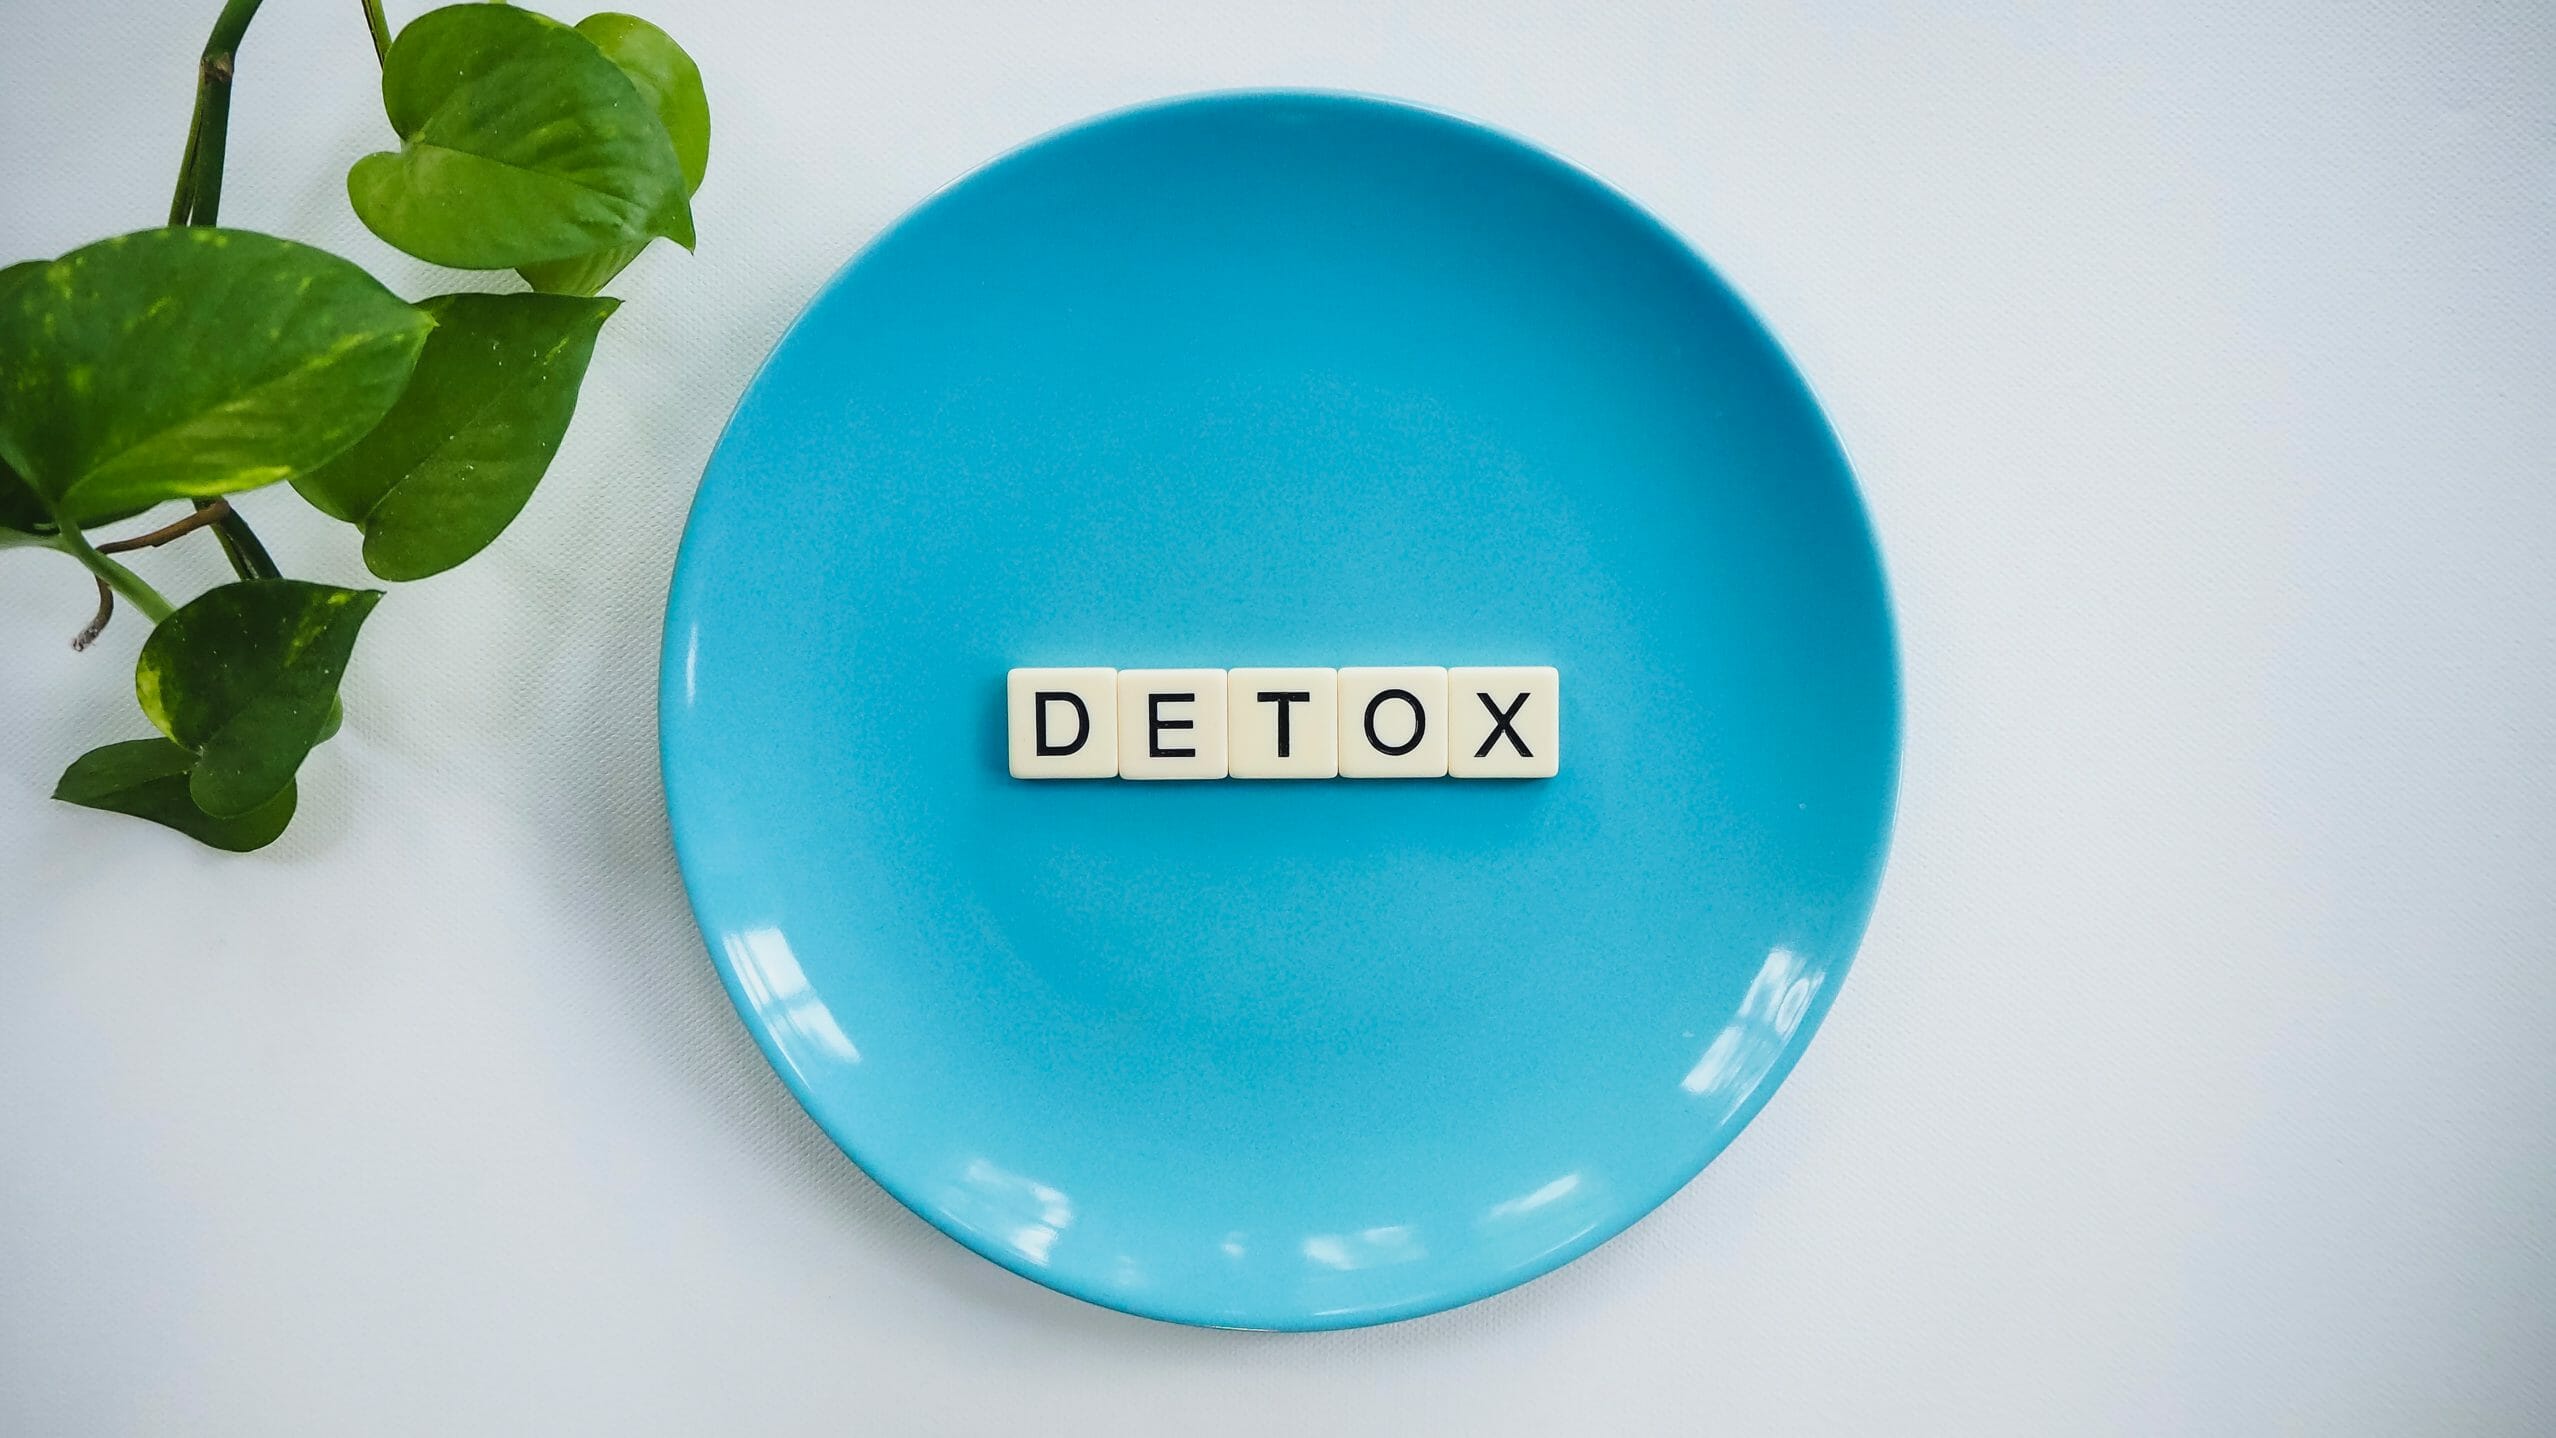 Should you detox your body? 4 myths about detoxing